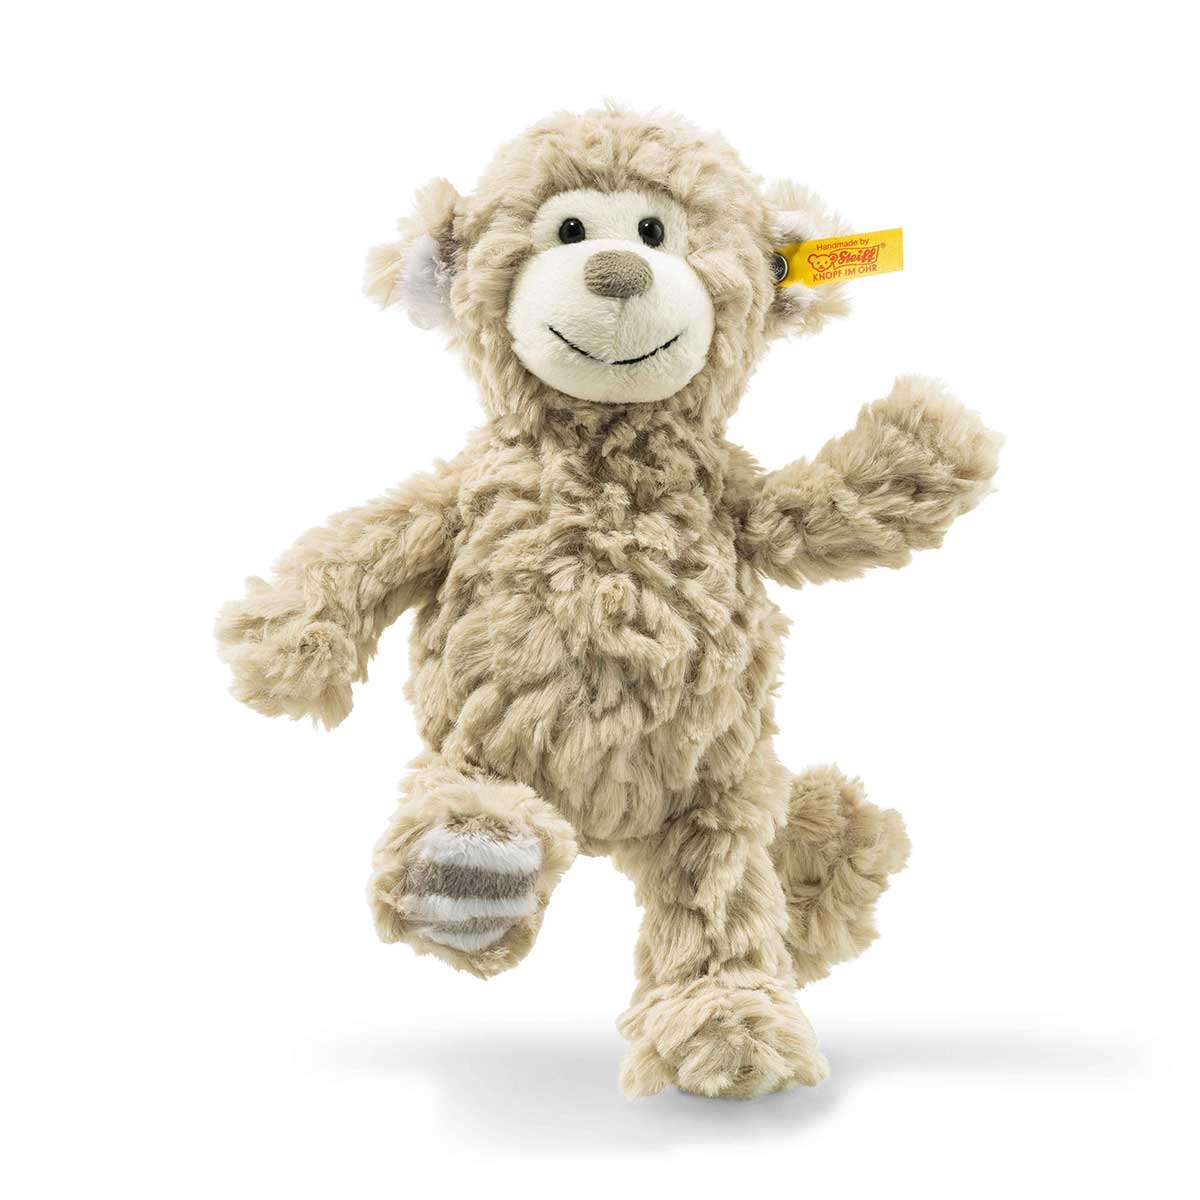 Steiff Soft & Cuddly Friends Bingo the Monkey 20cm Soft Toy